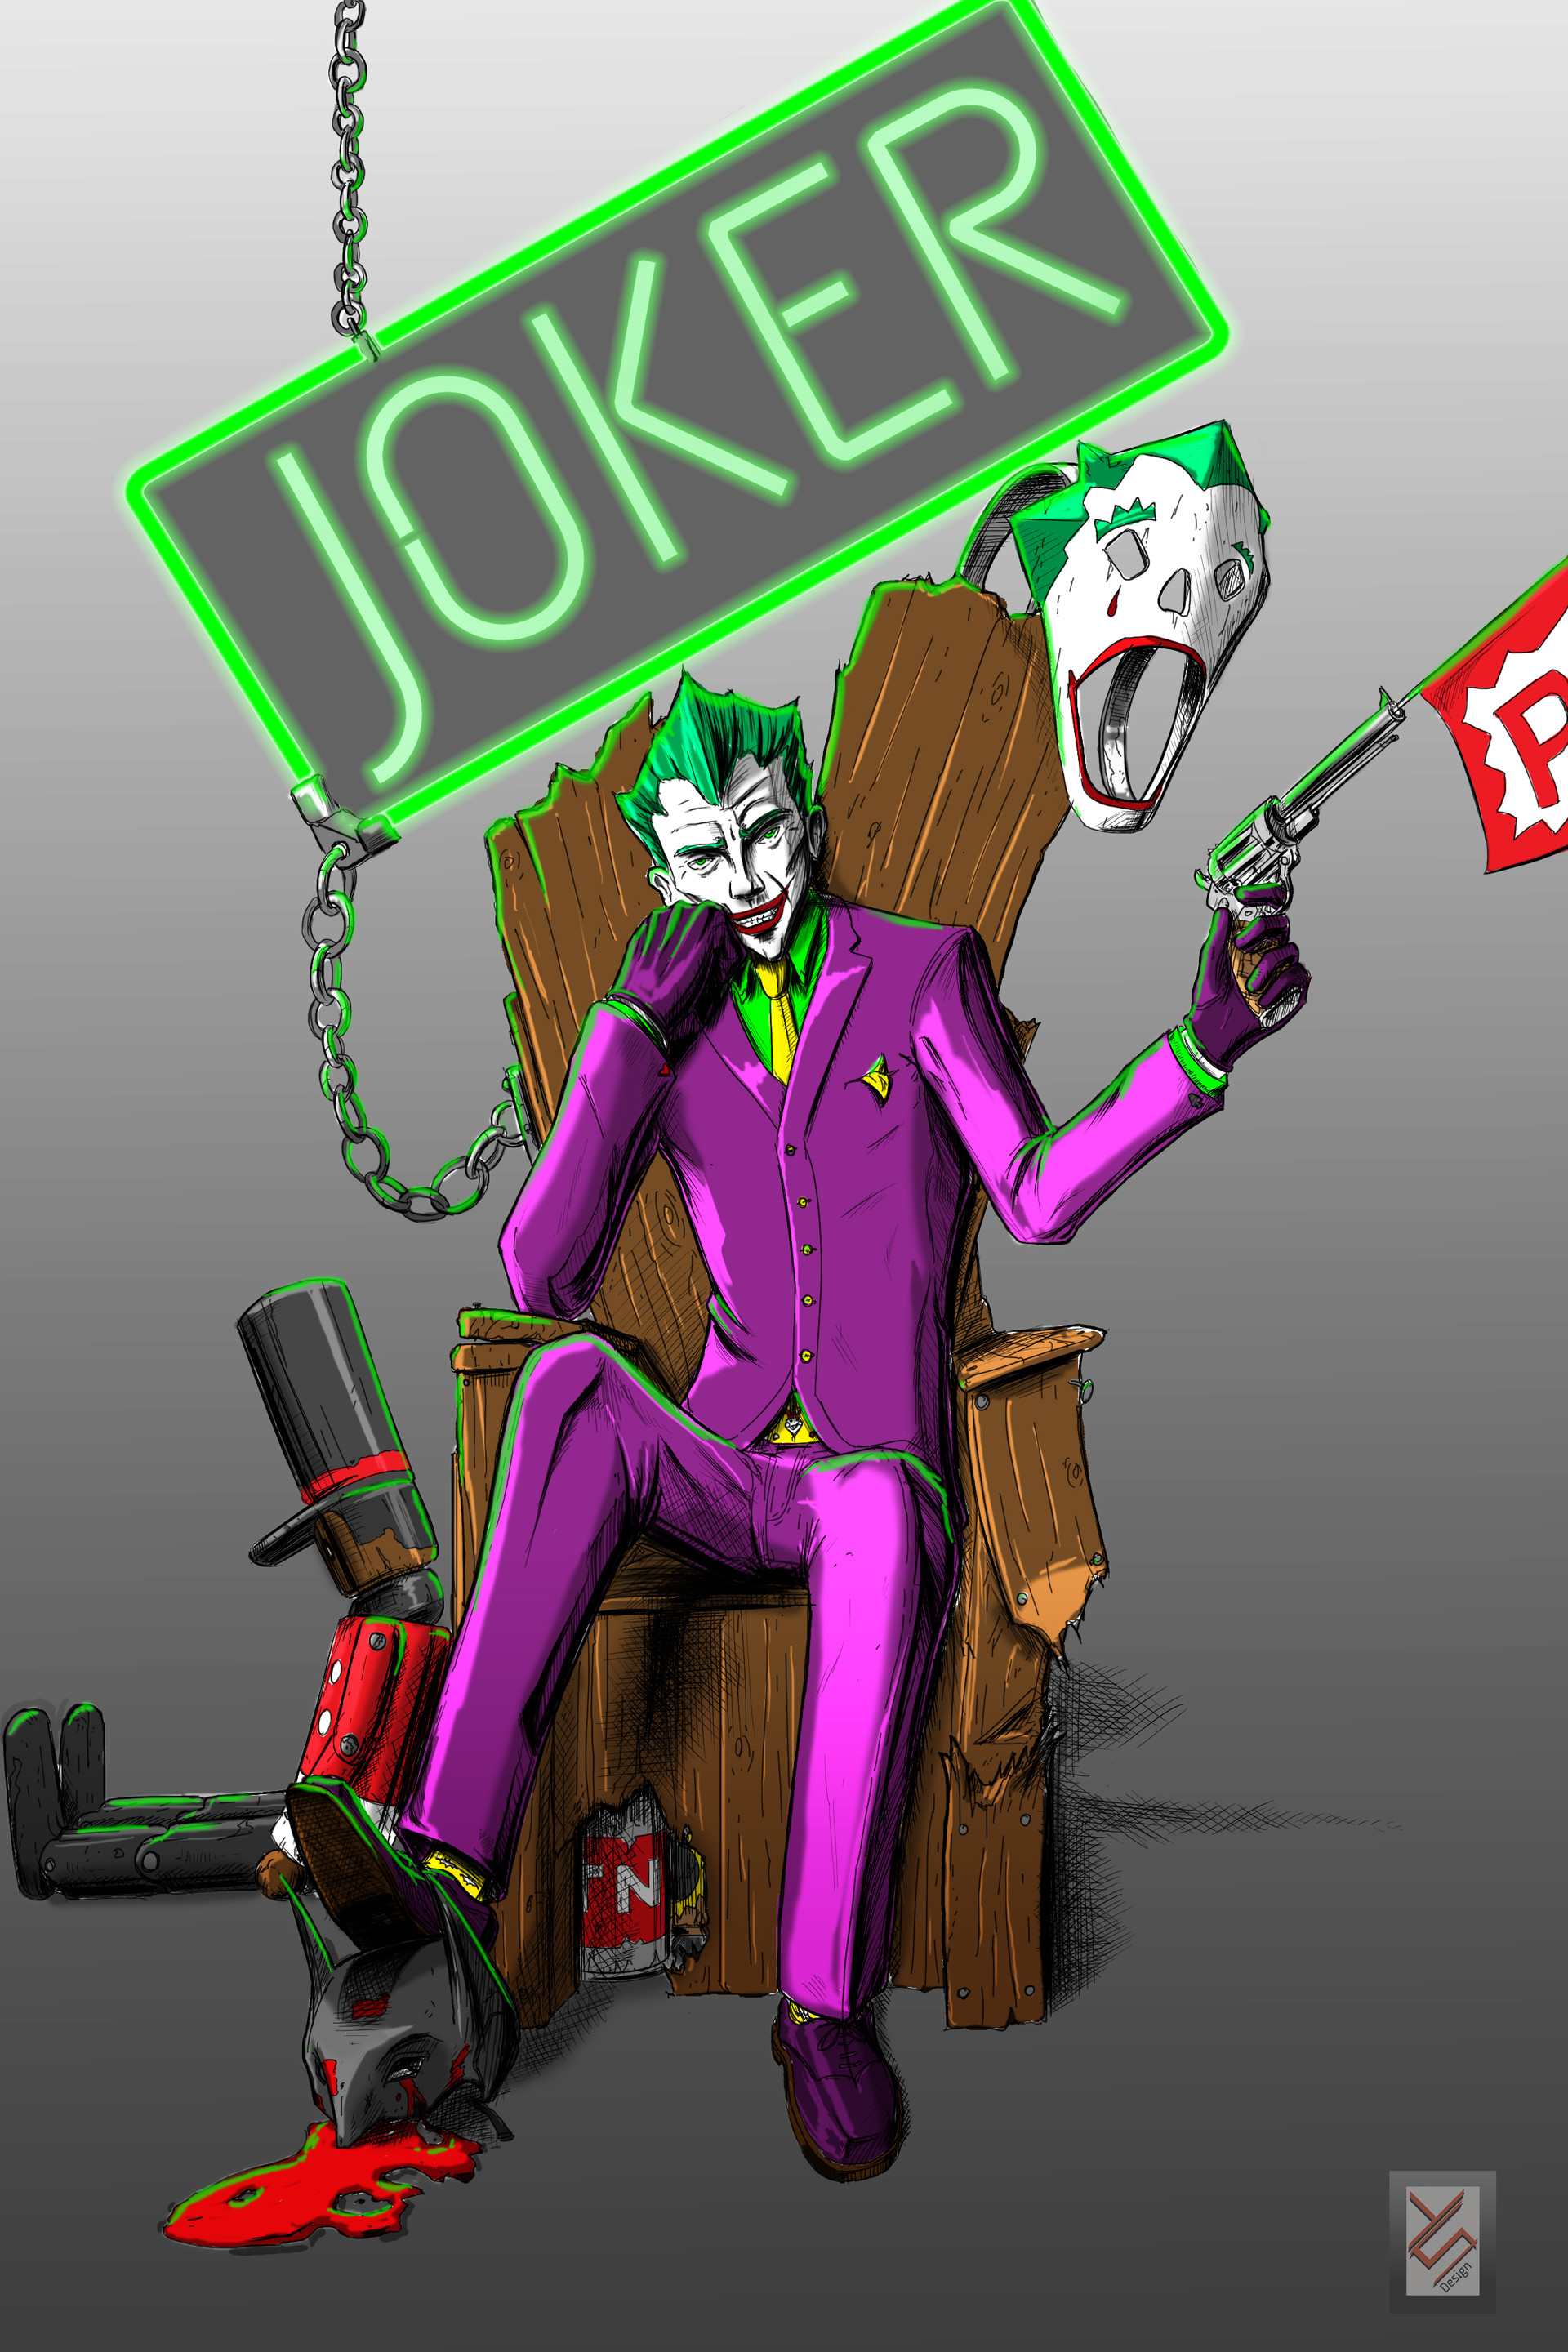 ArtStation - Joker tech